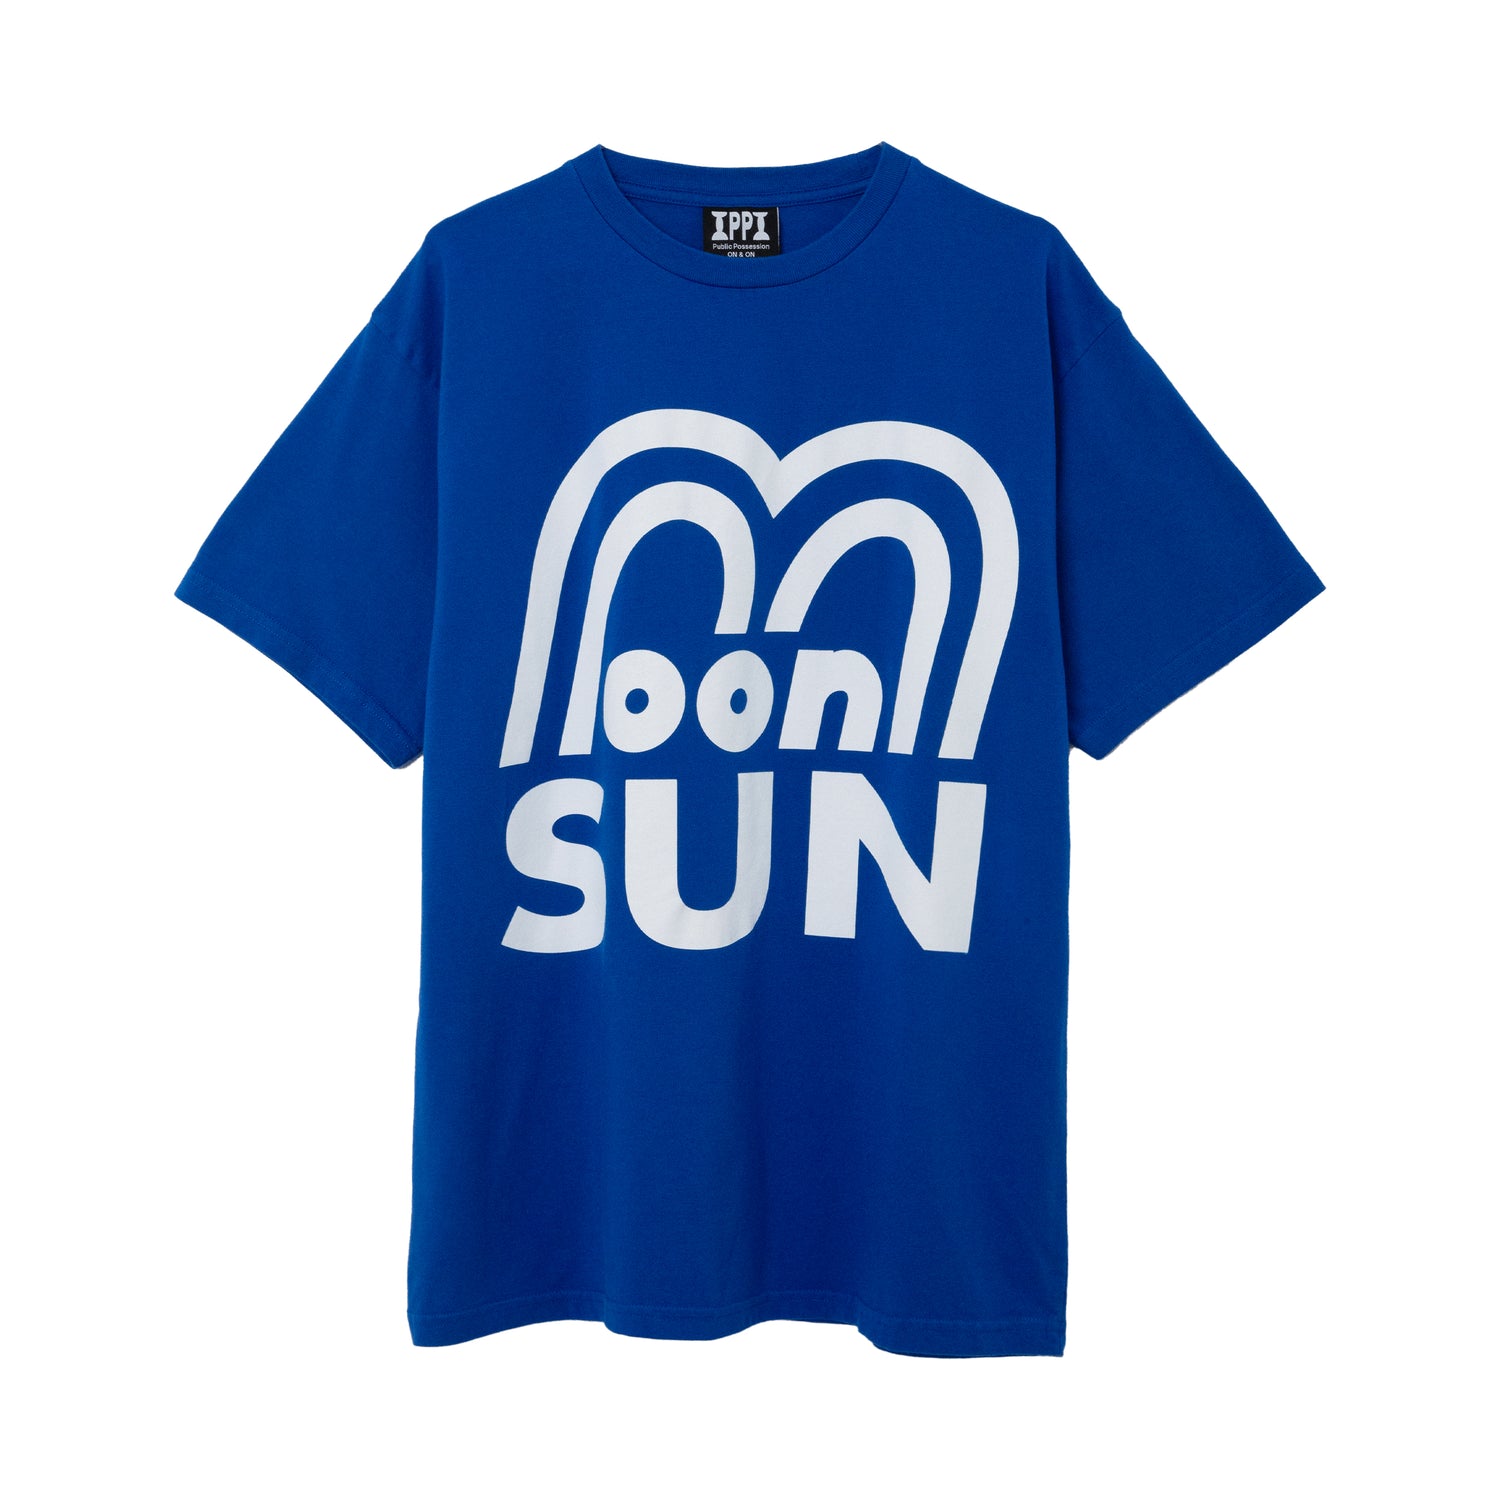 SUN&MOON T-SHIRT COTE D'AZUR BLUE